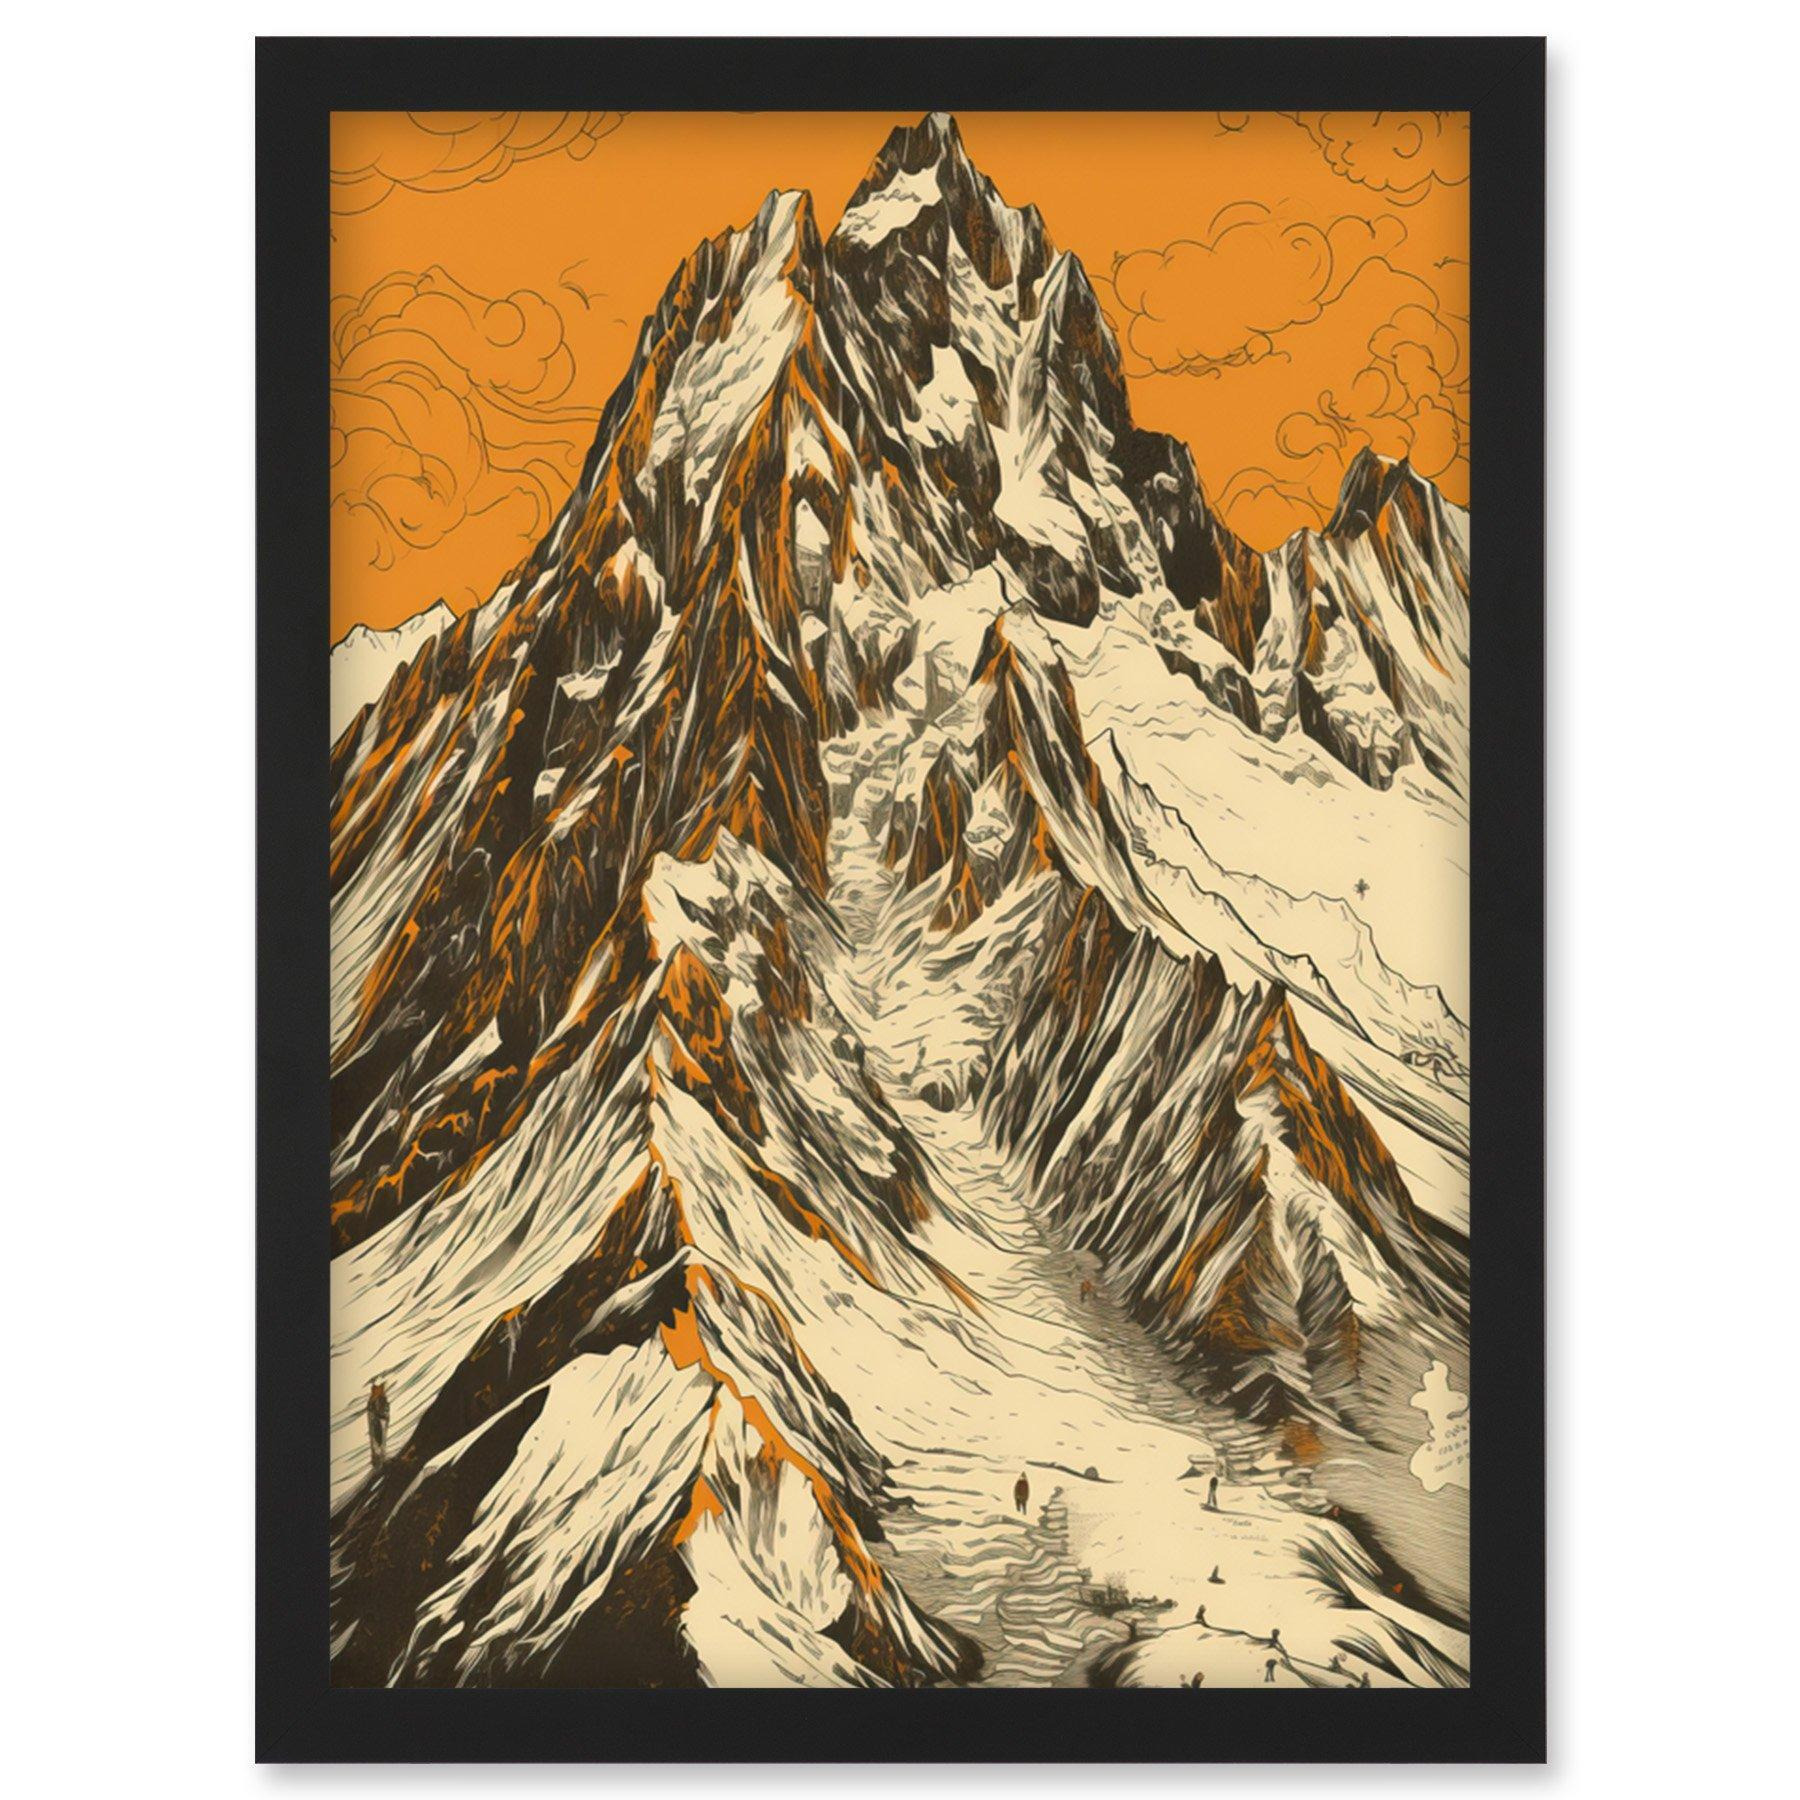 K2 Mountain Peak Summit Climbers White and Orange Artwork Framed Wall Art Print A4 - image 1